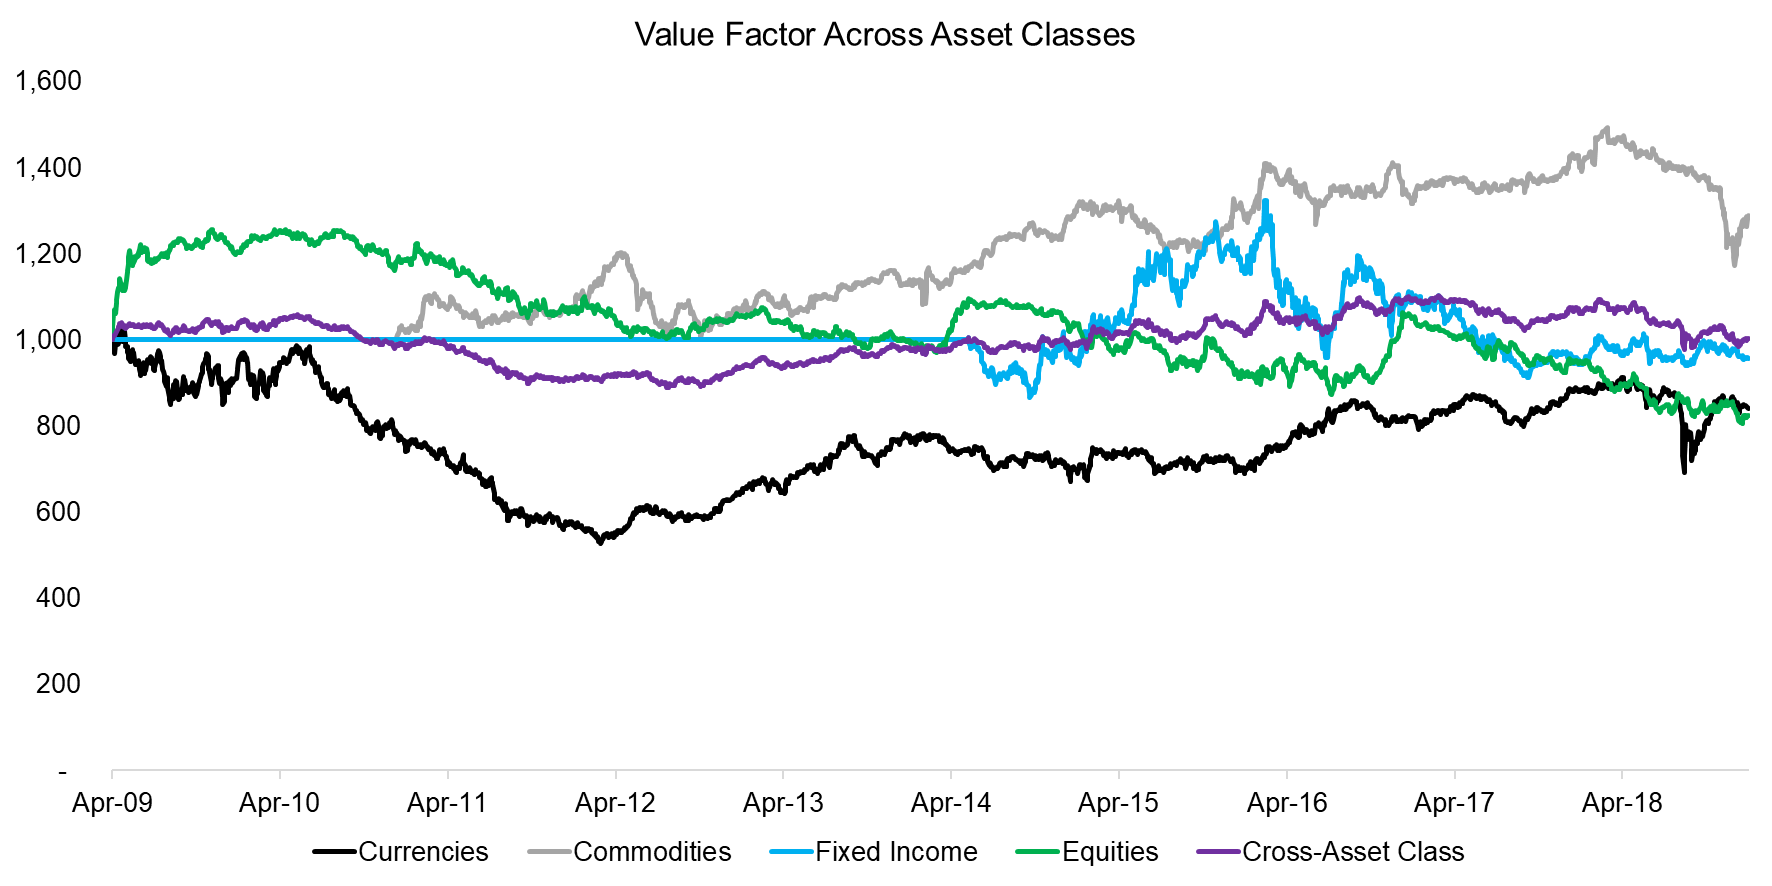 Value Factor Across Asset Classes